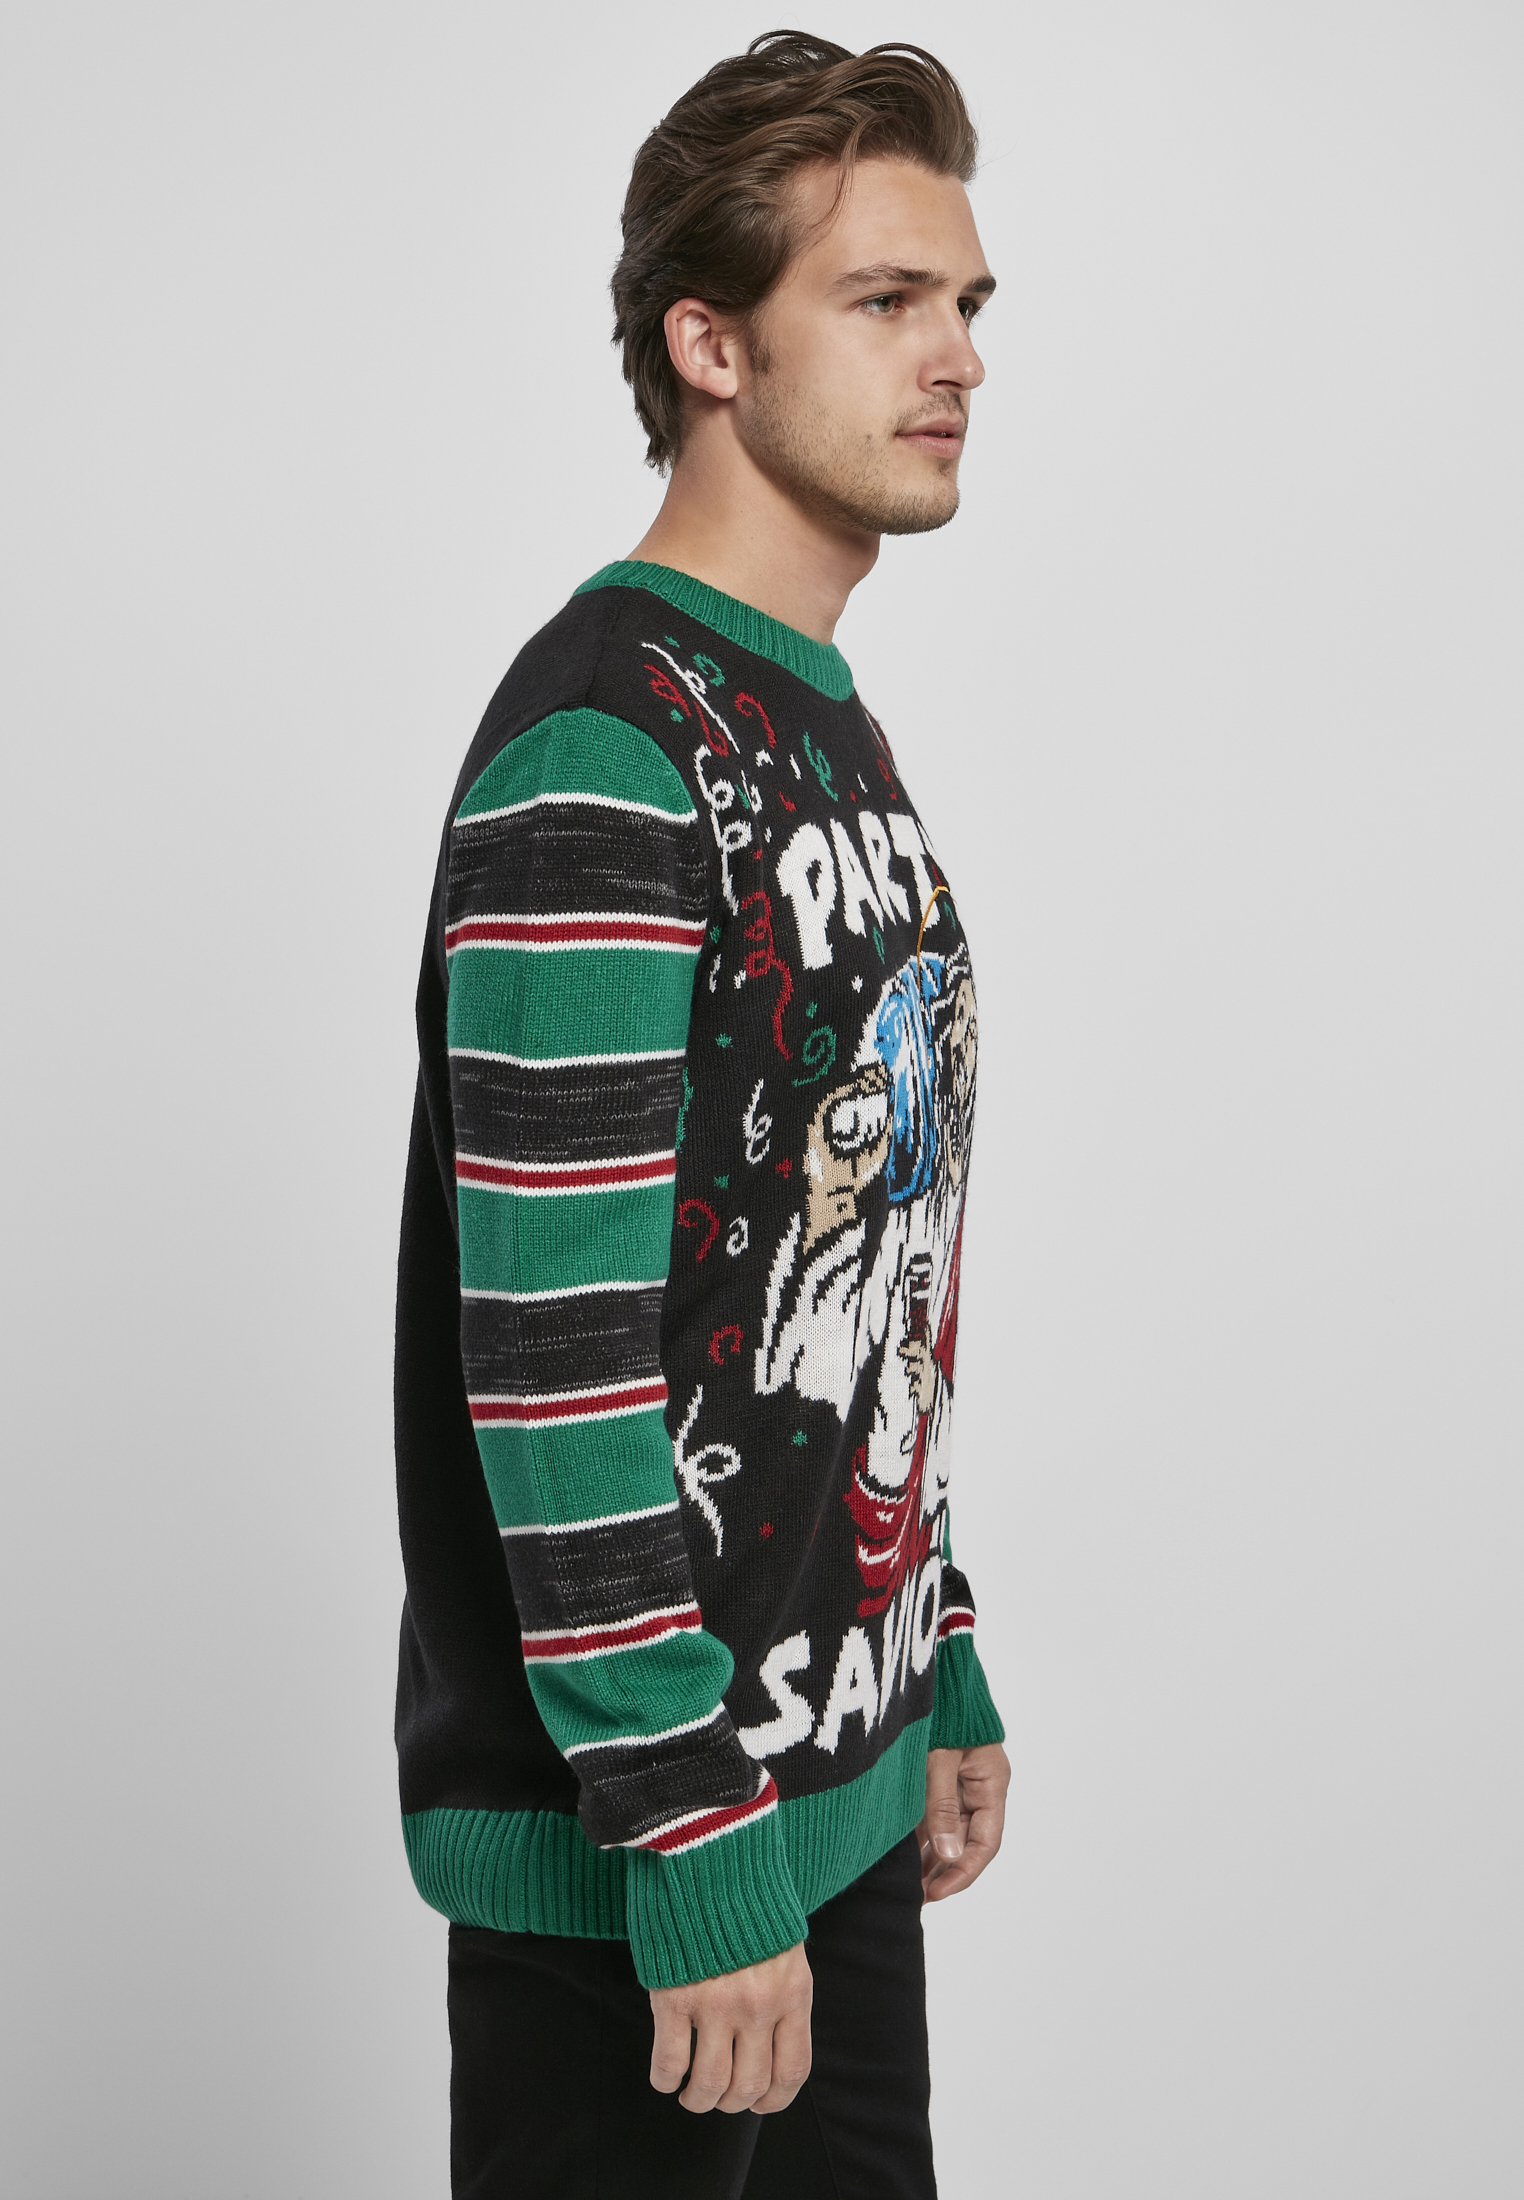 Crewnecks Savior Christmas Sweater in Farbe black/x-masgreen